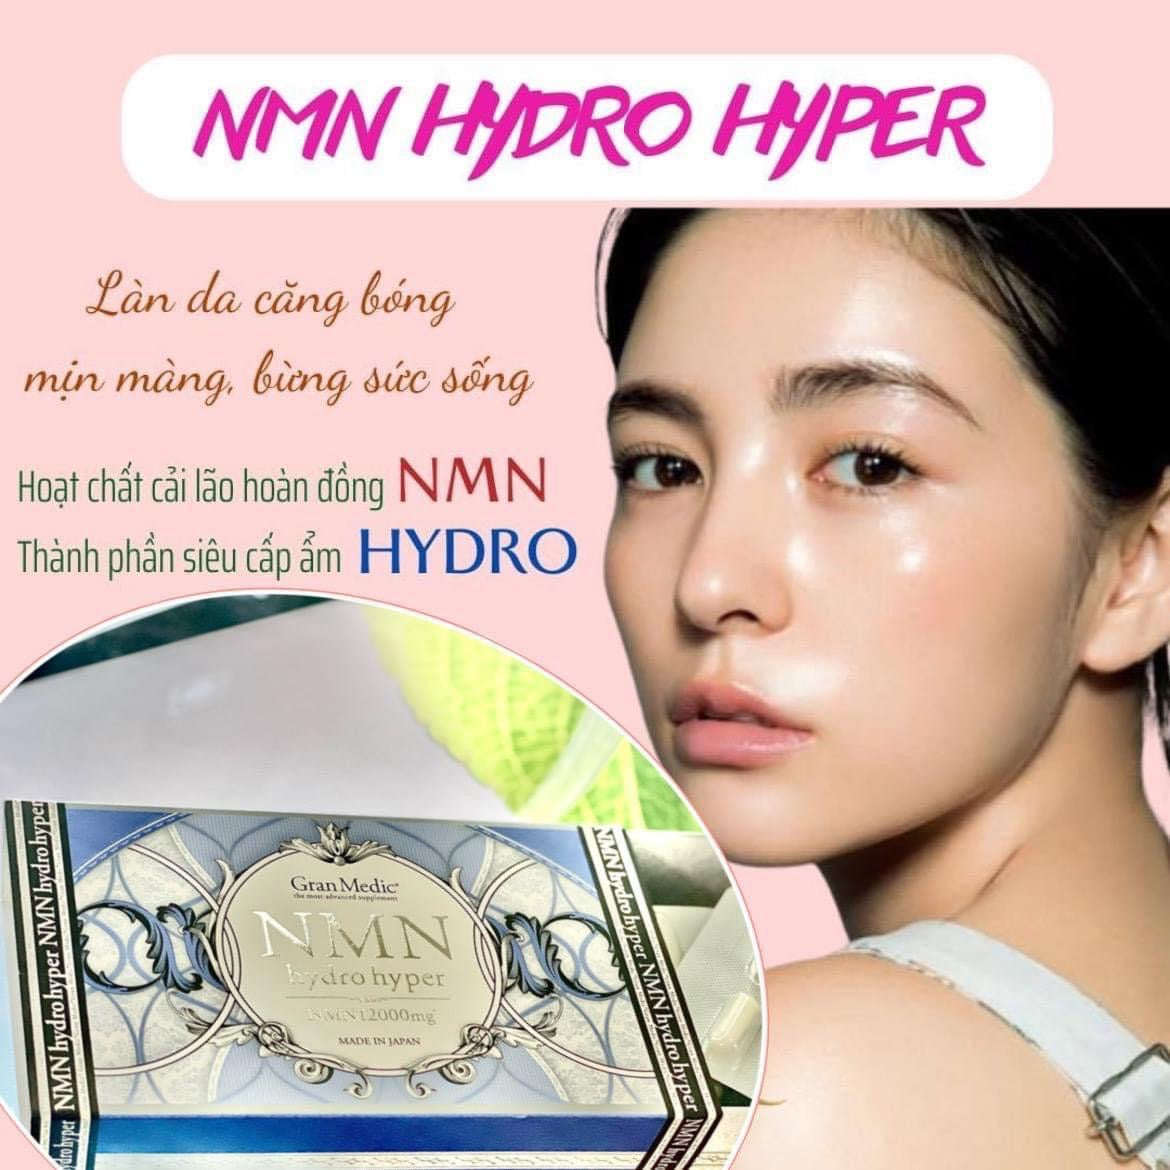 NMN hyper hydro